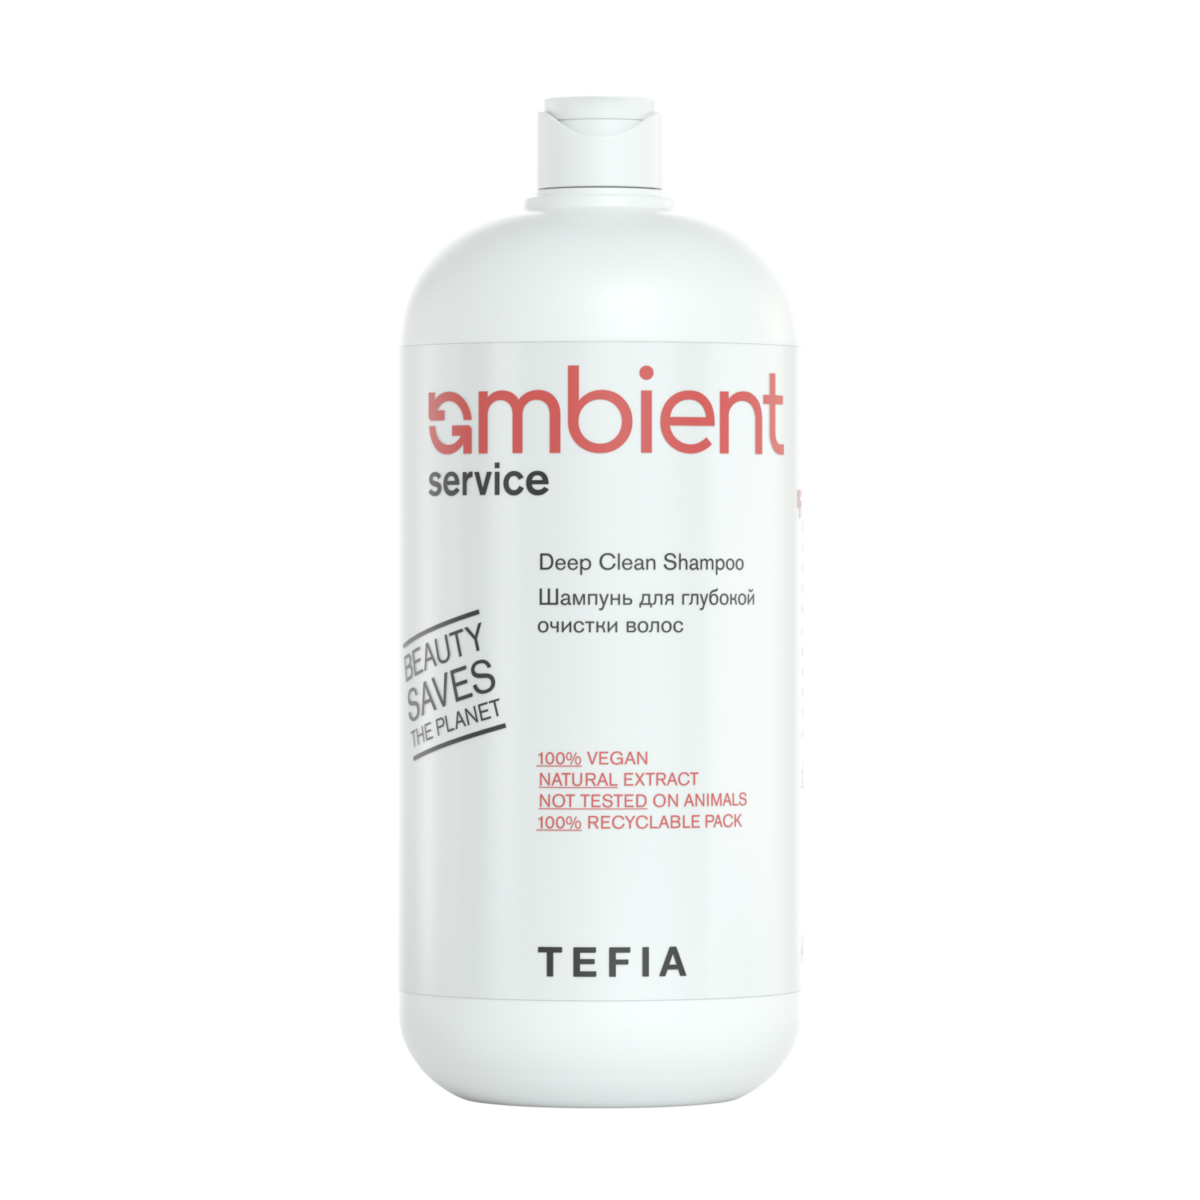 Ambient Service Deep Clean Shampoo Шампунь для глубокой очистки волос 1000 мл TEFIA